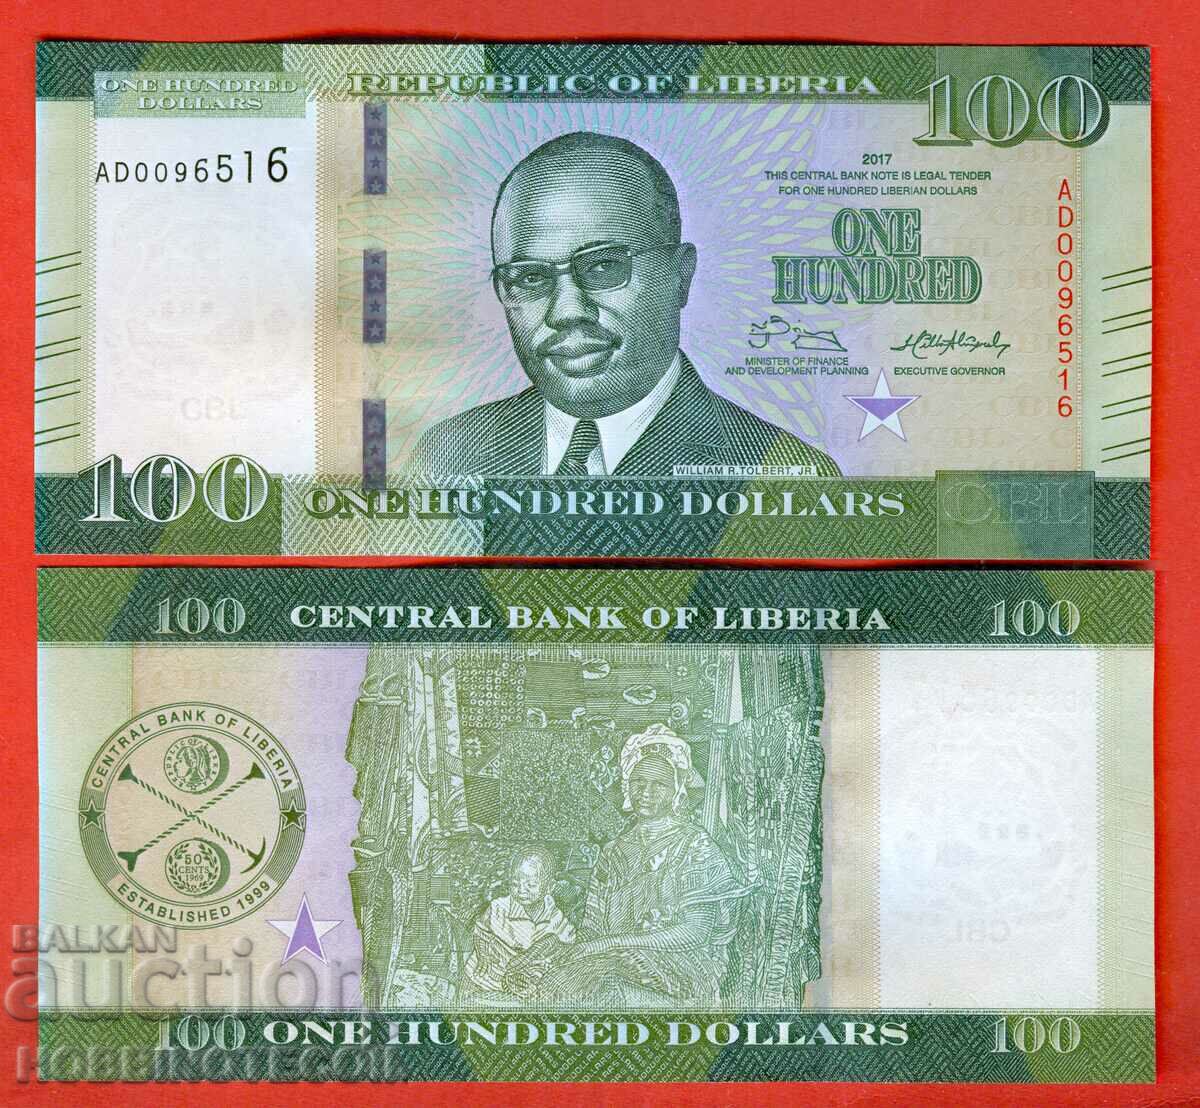 LIBERIA LIBERIA Emisiune de 100 USD 2017 NOU UNC